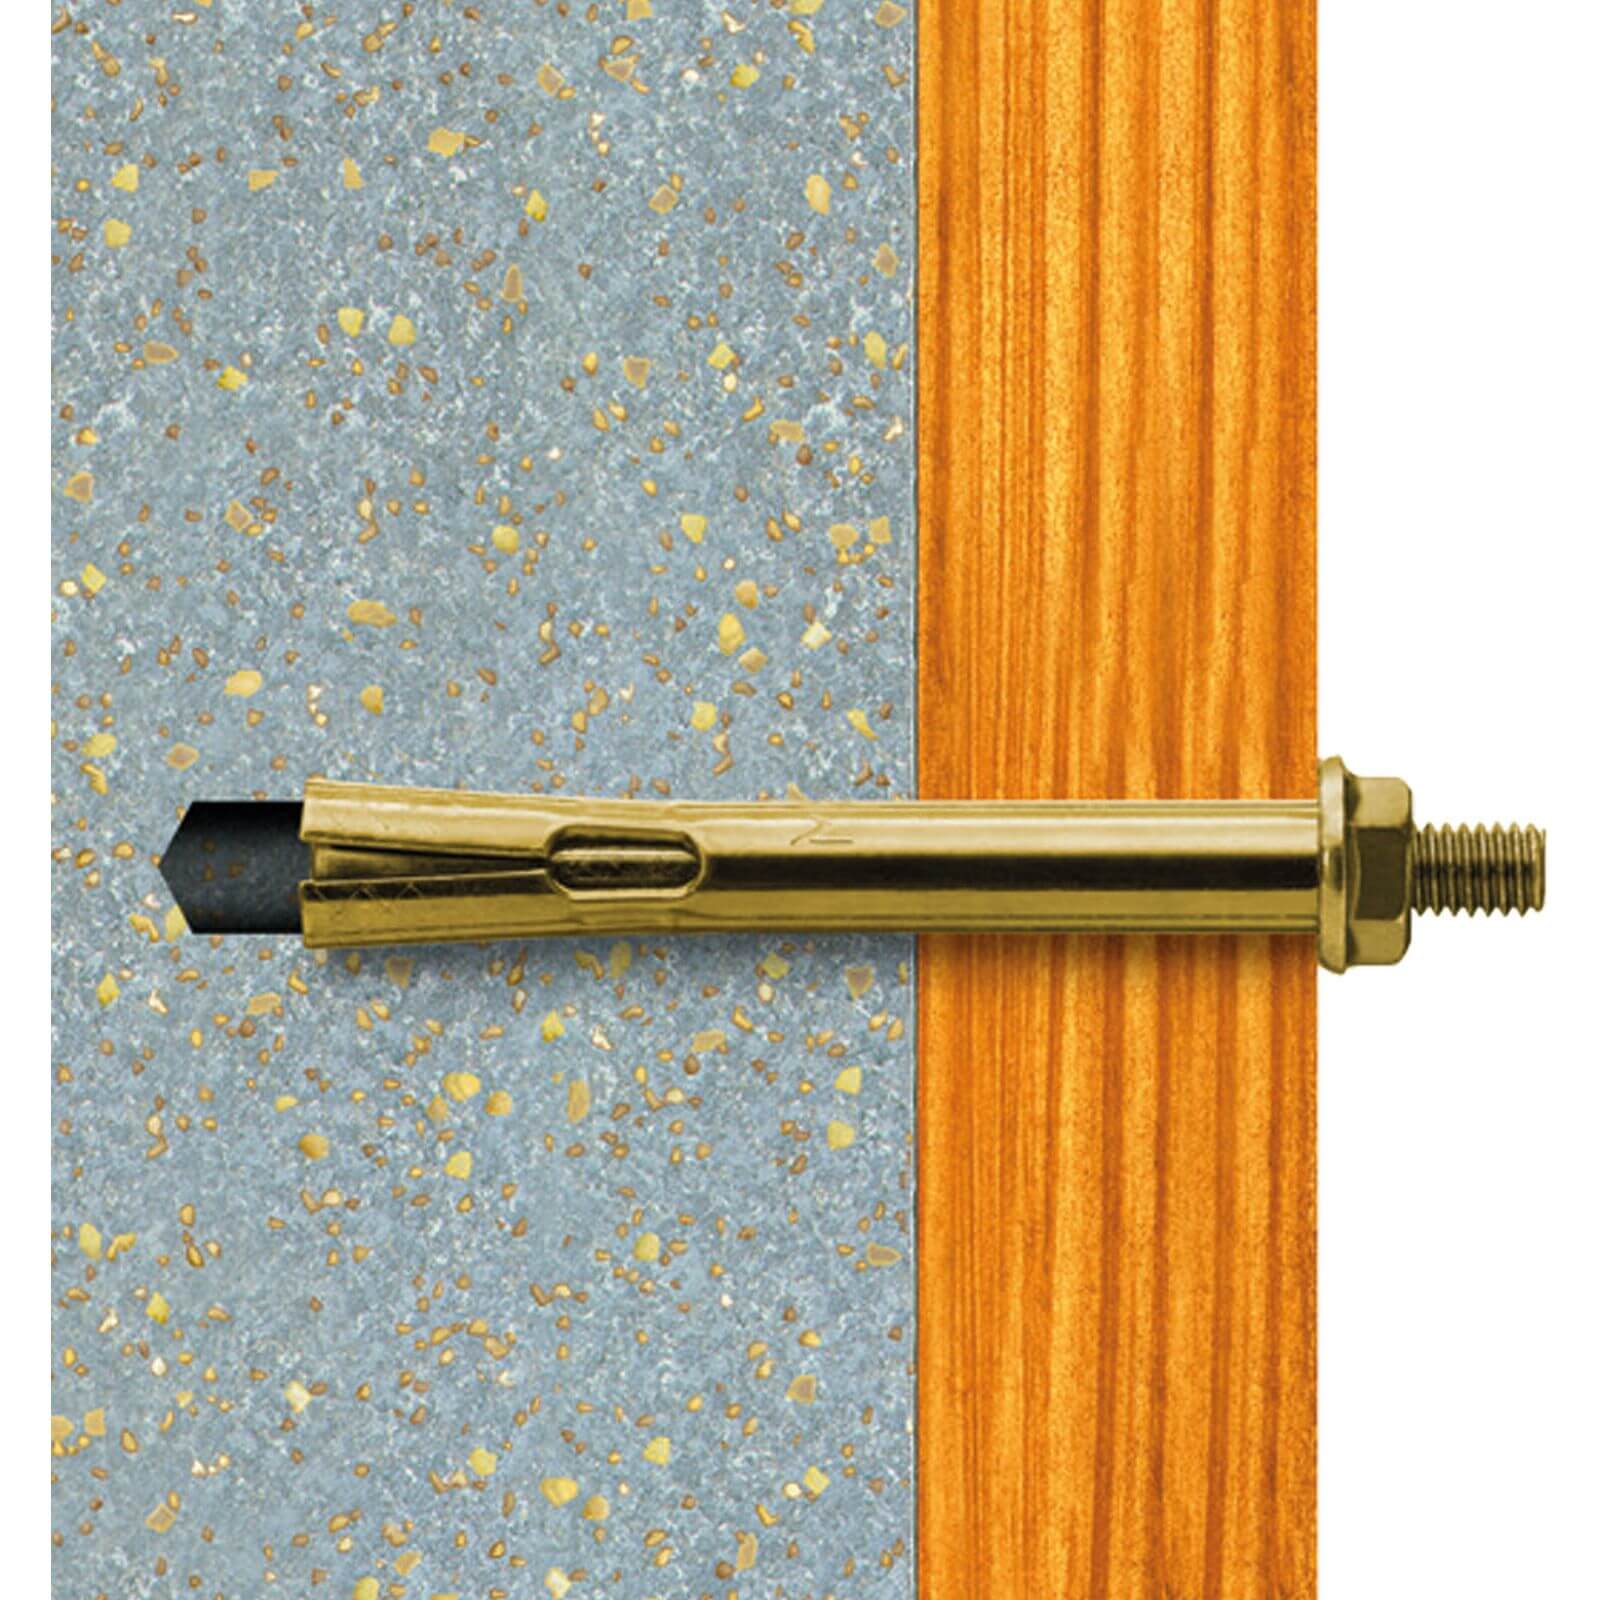 Plasplugs Sleeve Anchor 8 x 45mm